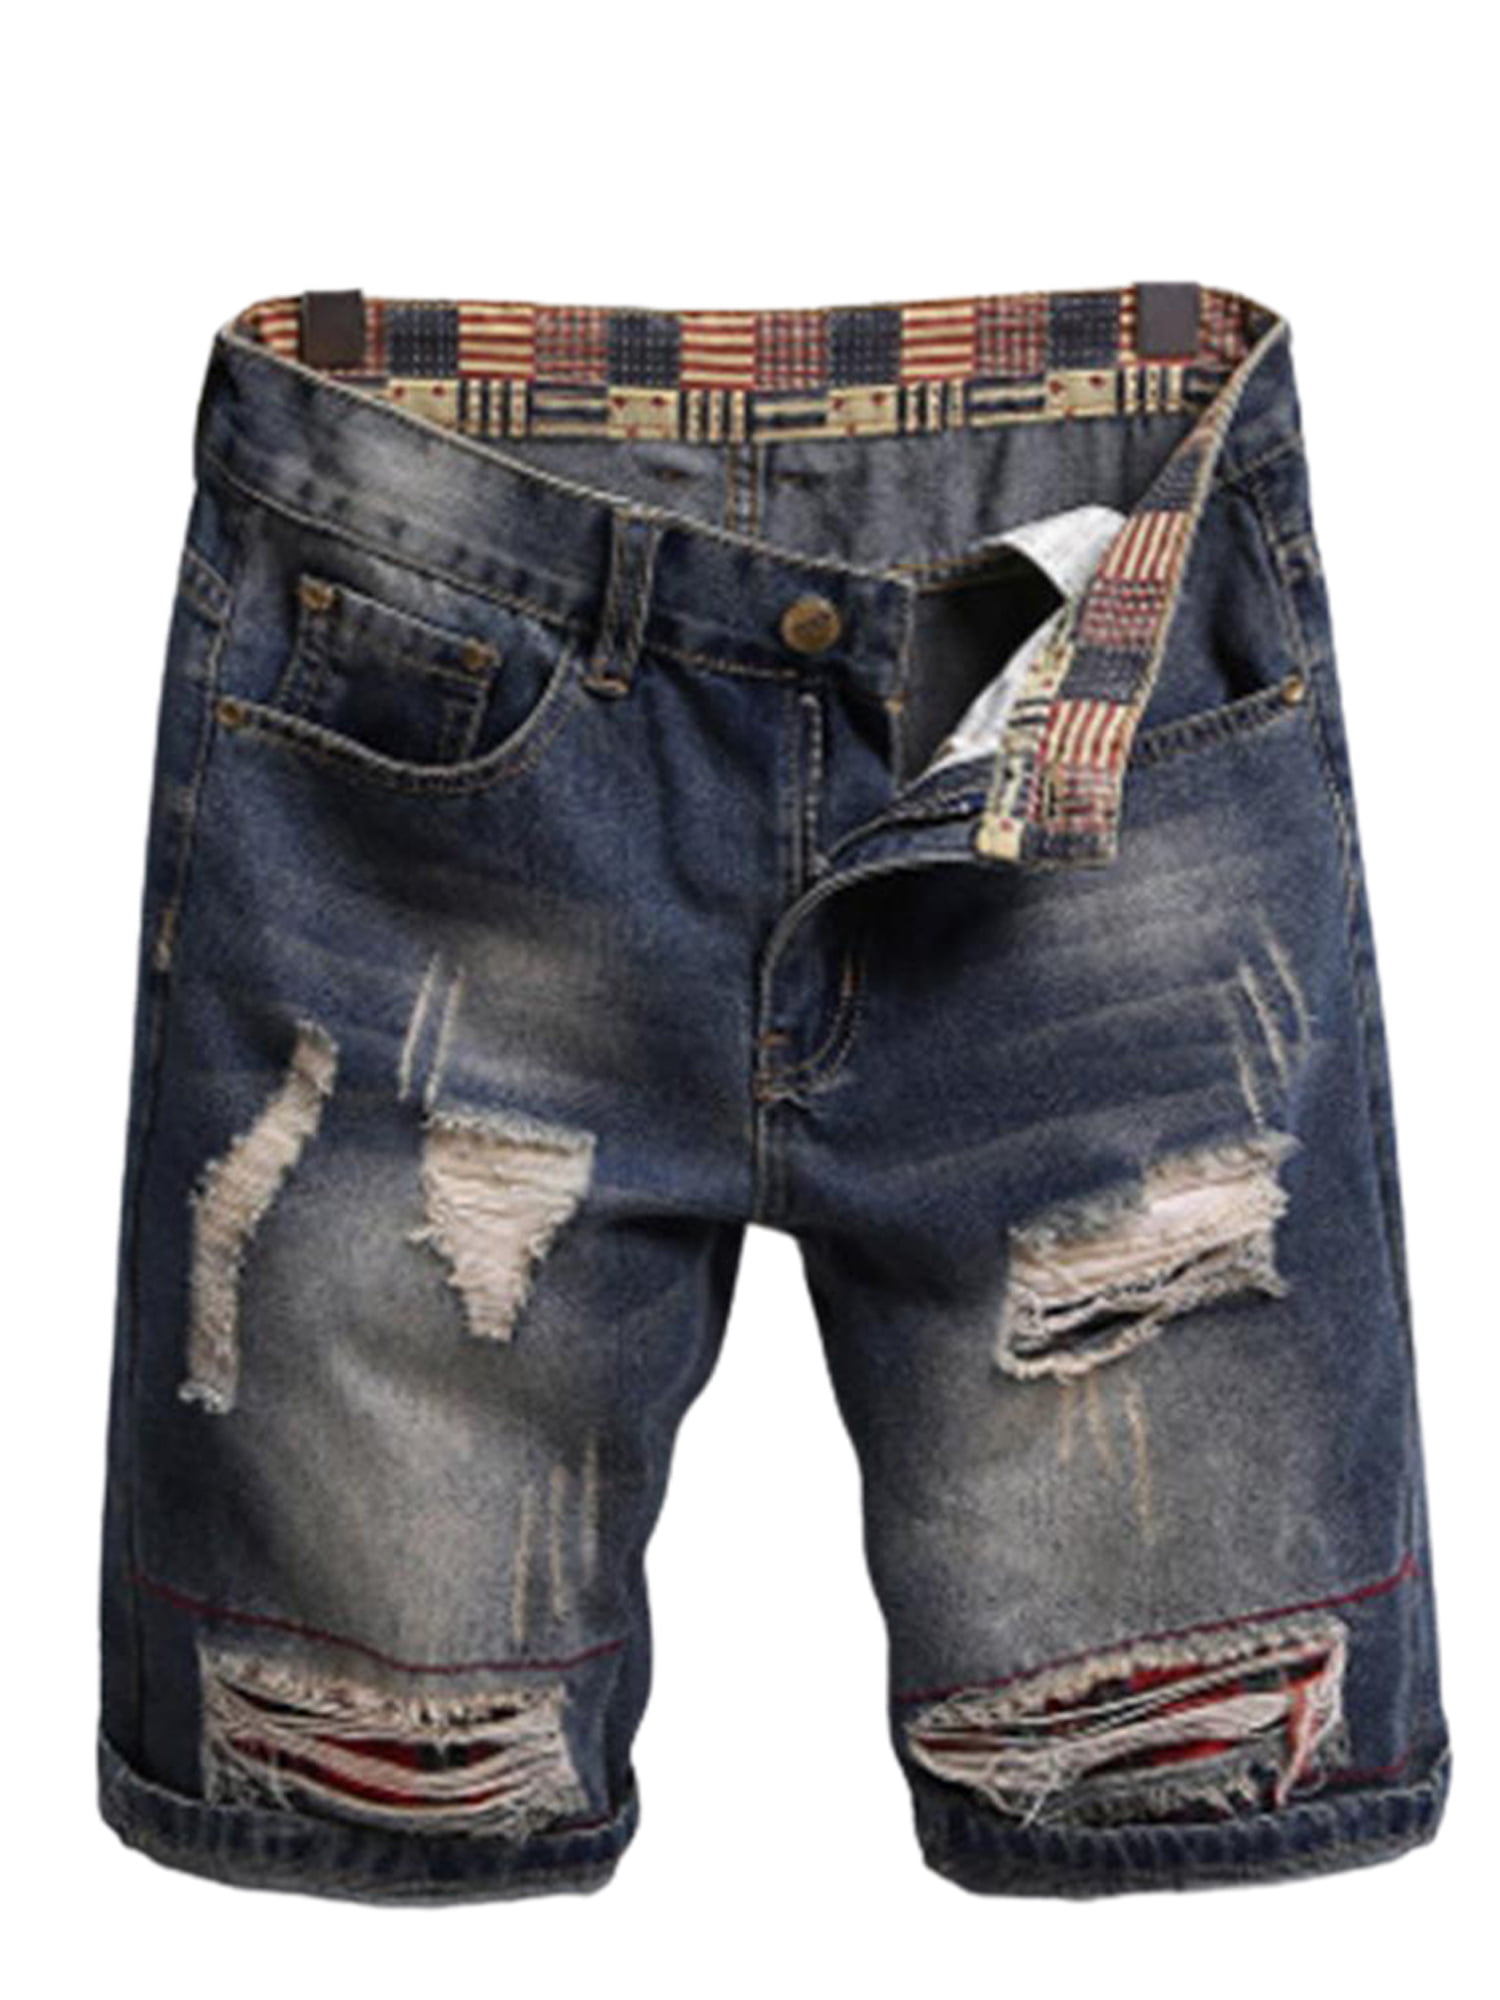 Men Denim shorts short Pant Destroyed Jeans short jean pants Stretch Pant Frayed 